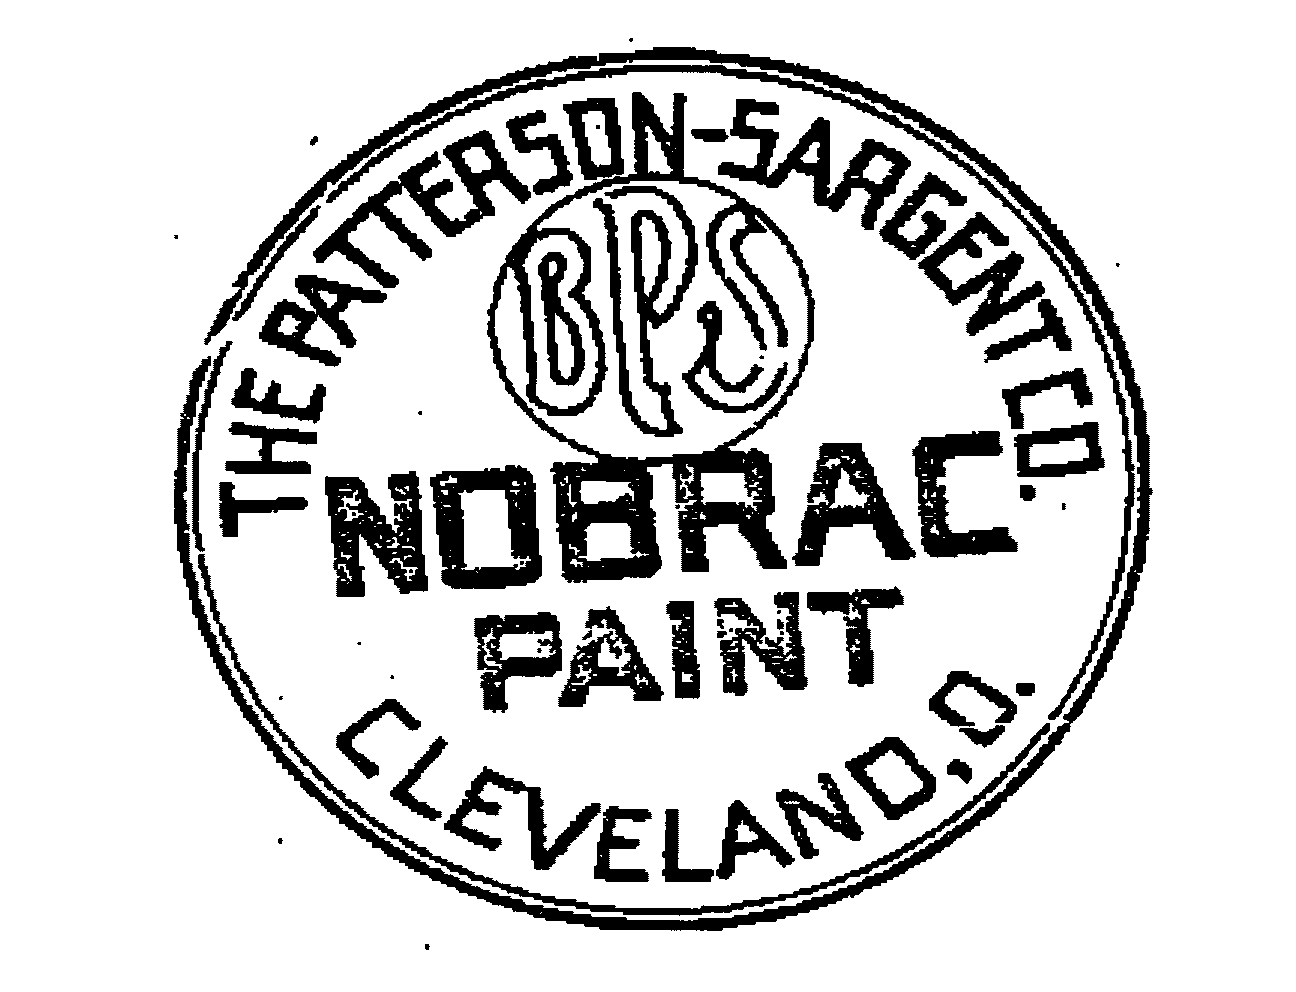  BPS NOBRAC PAINT THE PATTERSON-SARGENT CO. CLEVELAND, O.